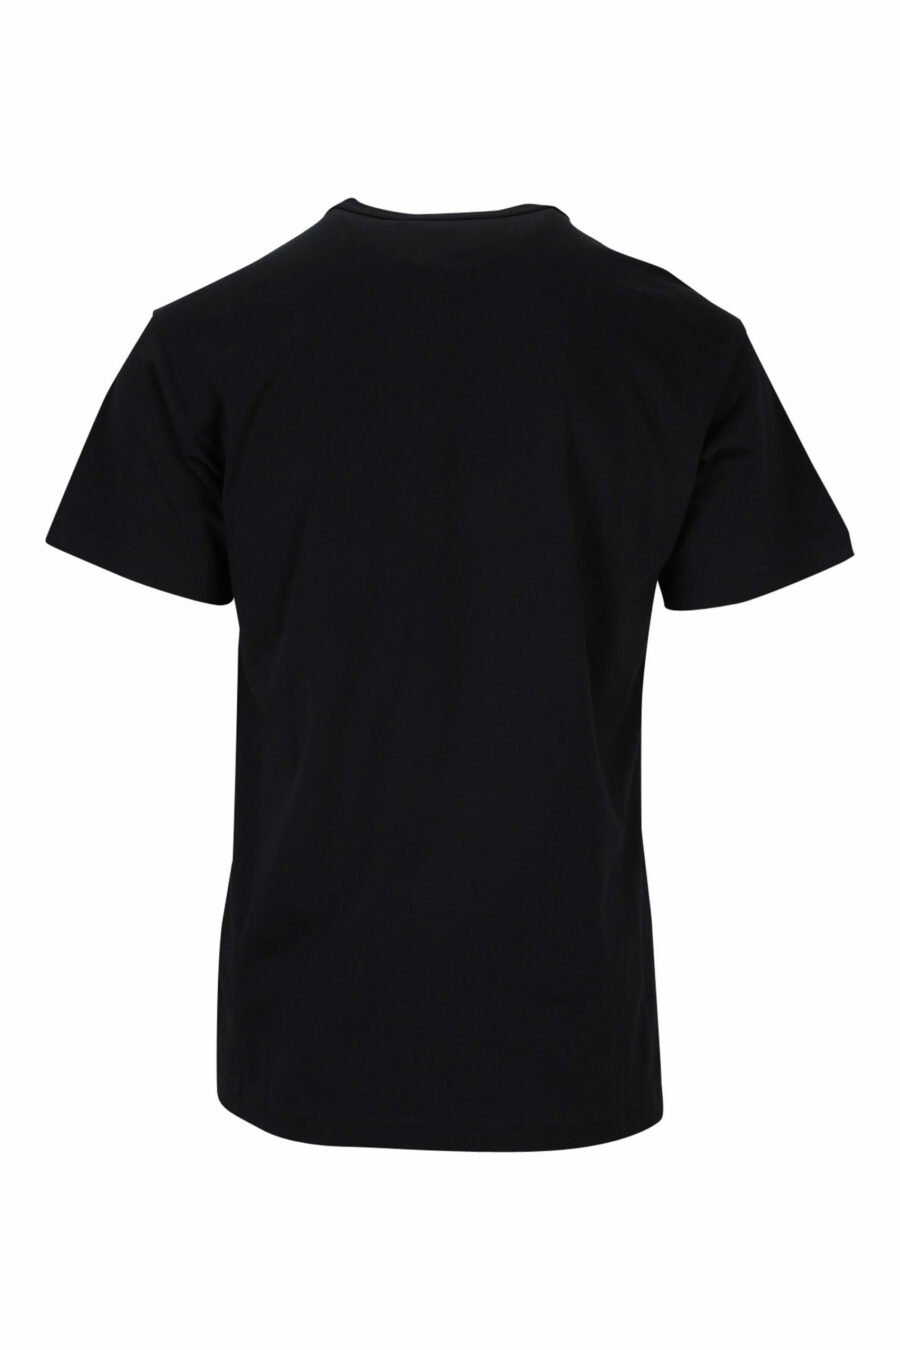 T-shirt preta com maxilogo barroco circular - 8052019477481 1 scaled